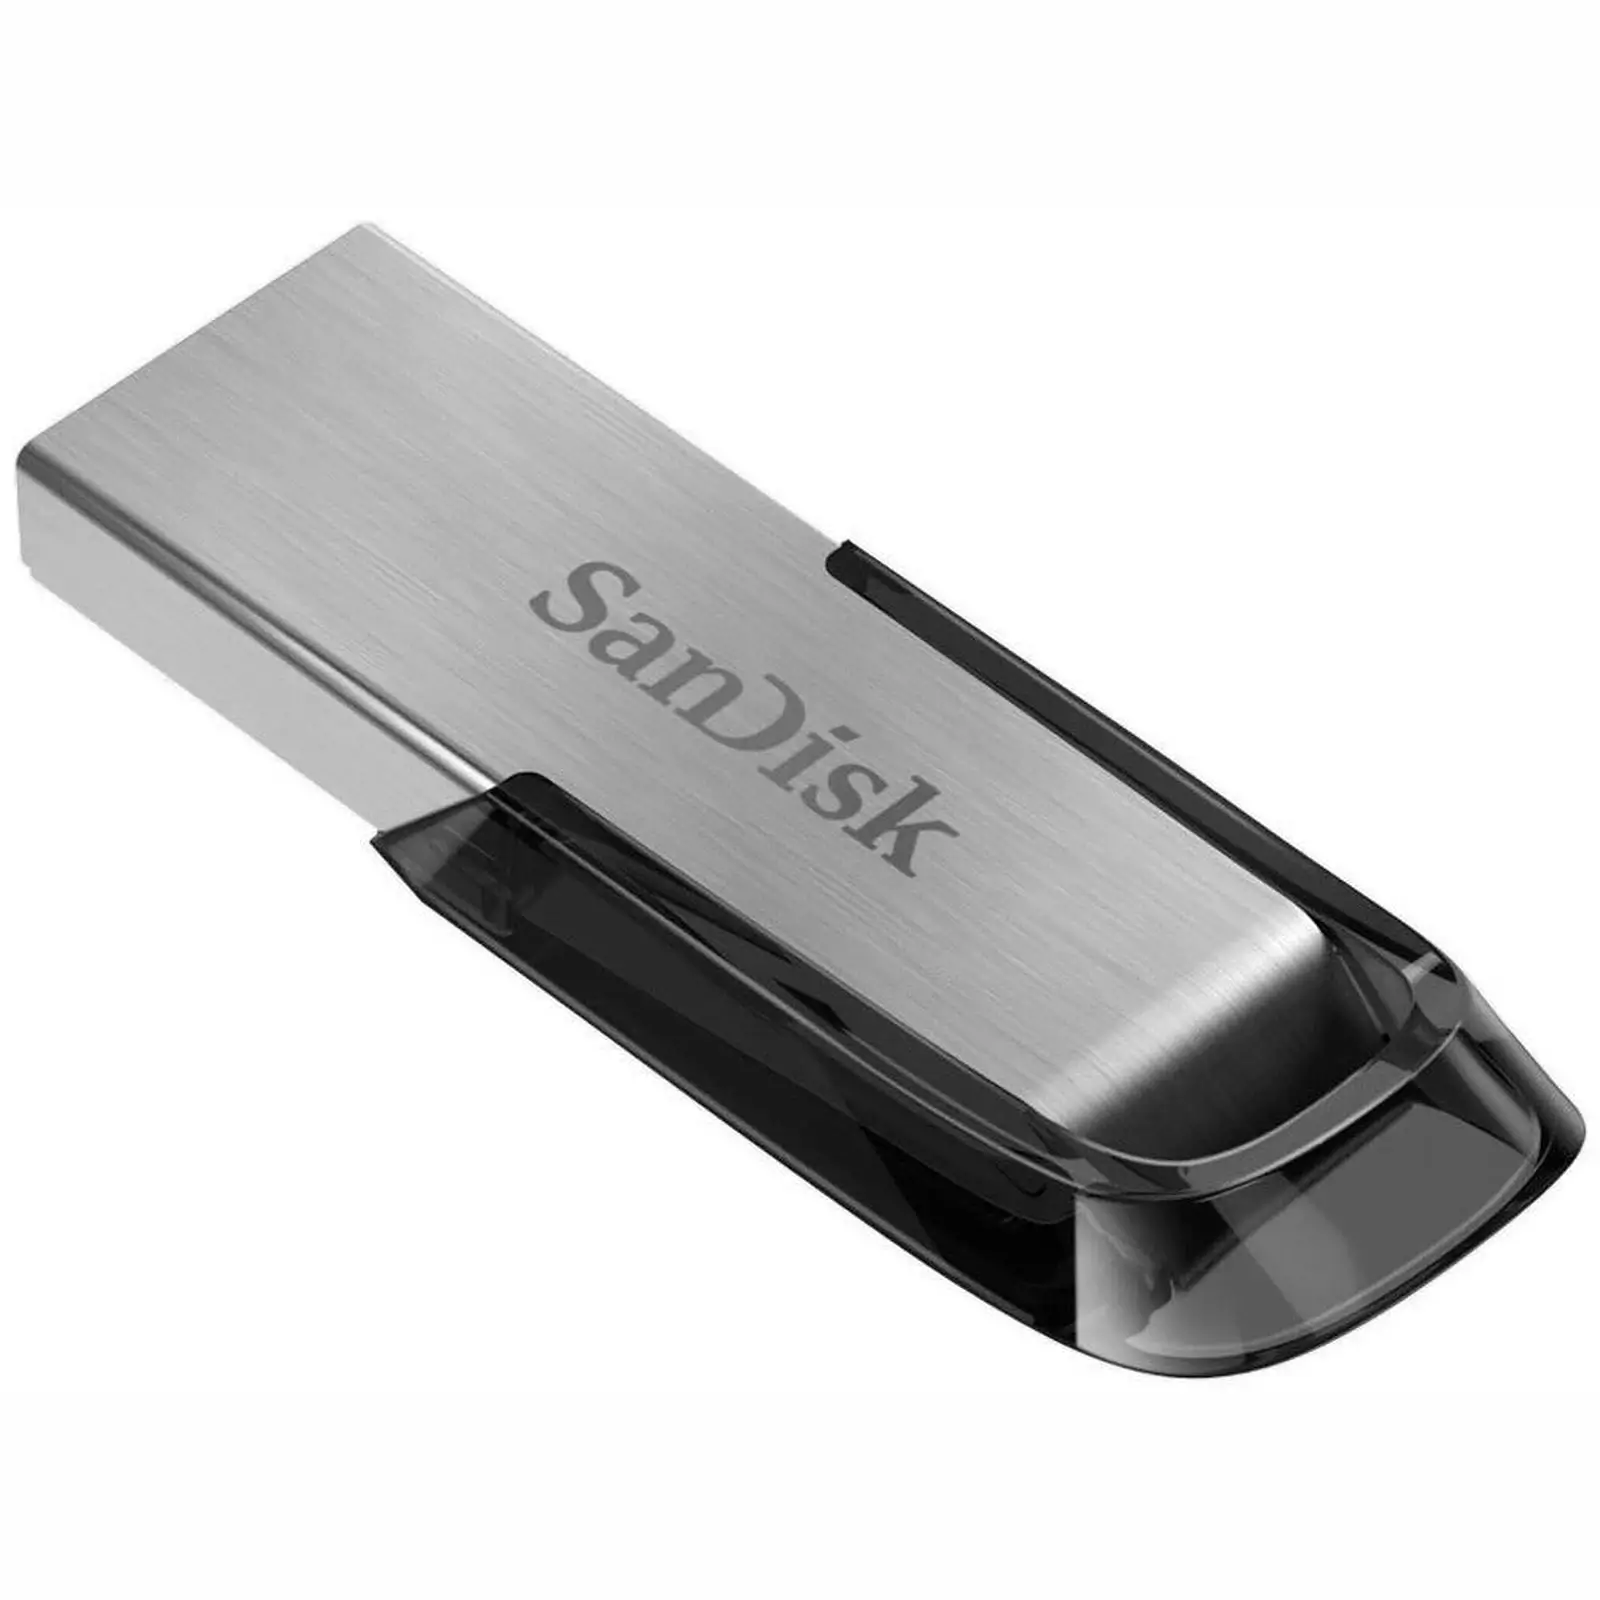 Clé USB 2.0 Cruzer Blade 32 Go SANDISK